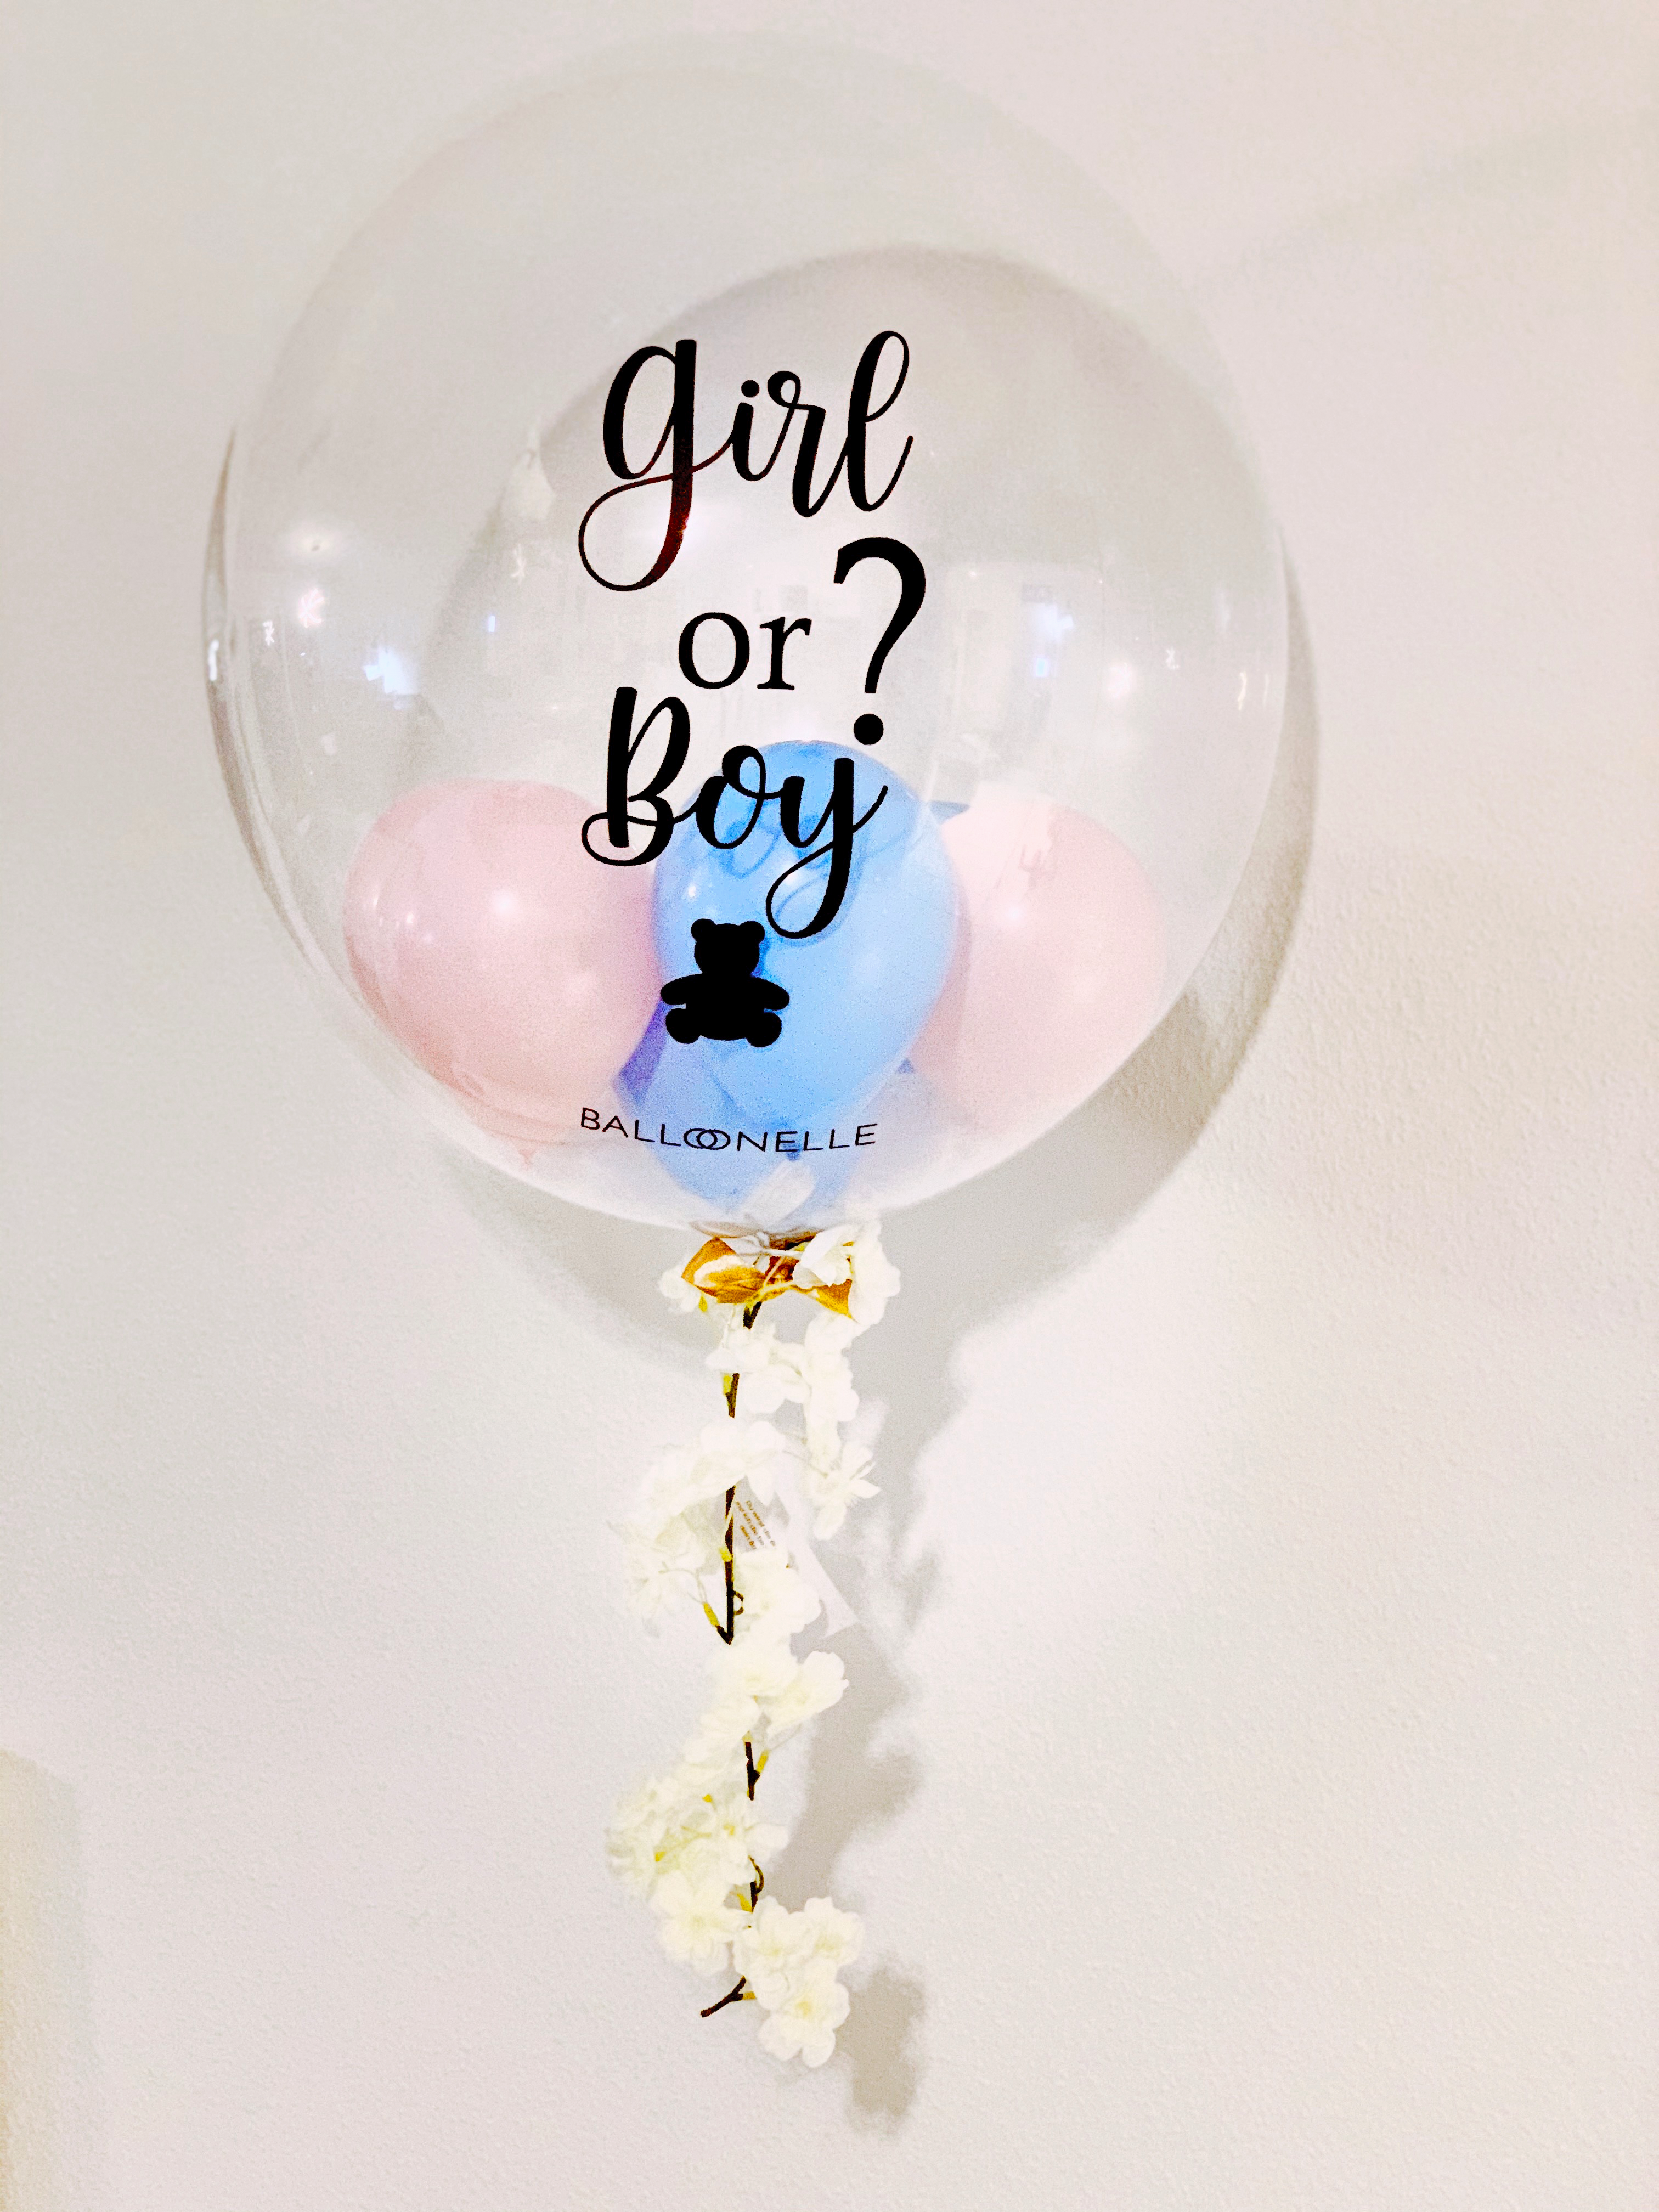 Girl or Boy Designer Ballon - BALLOONELLE